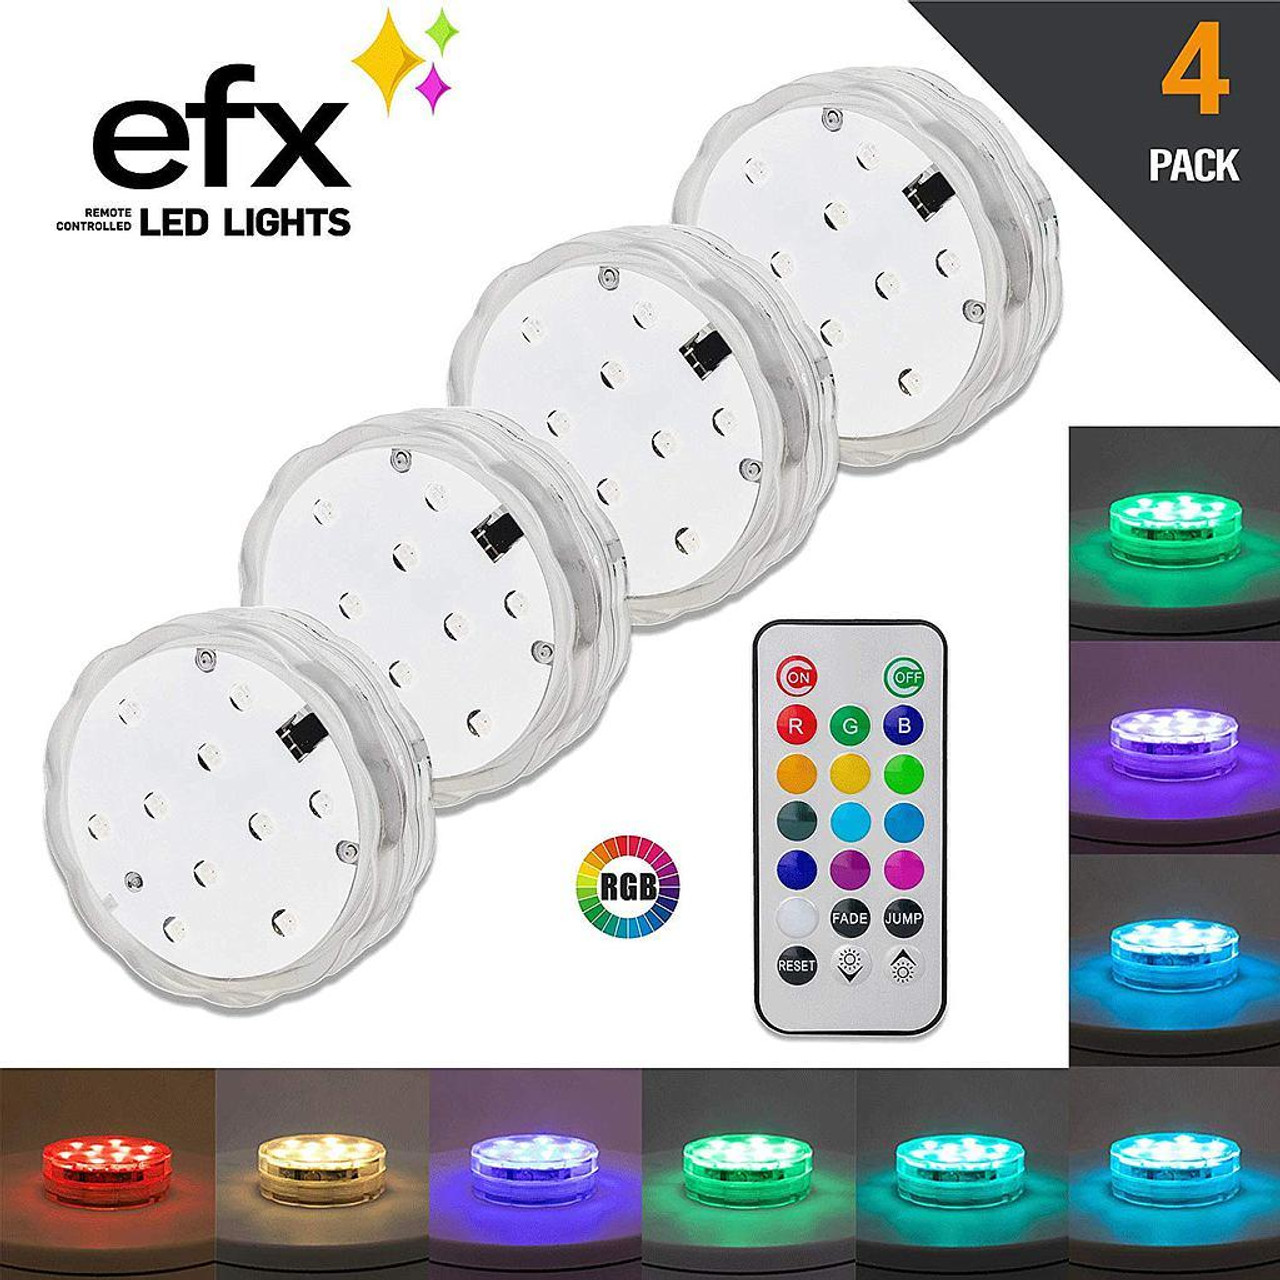 LUMN8™ EFX LED Remote Control Light